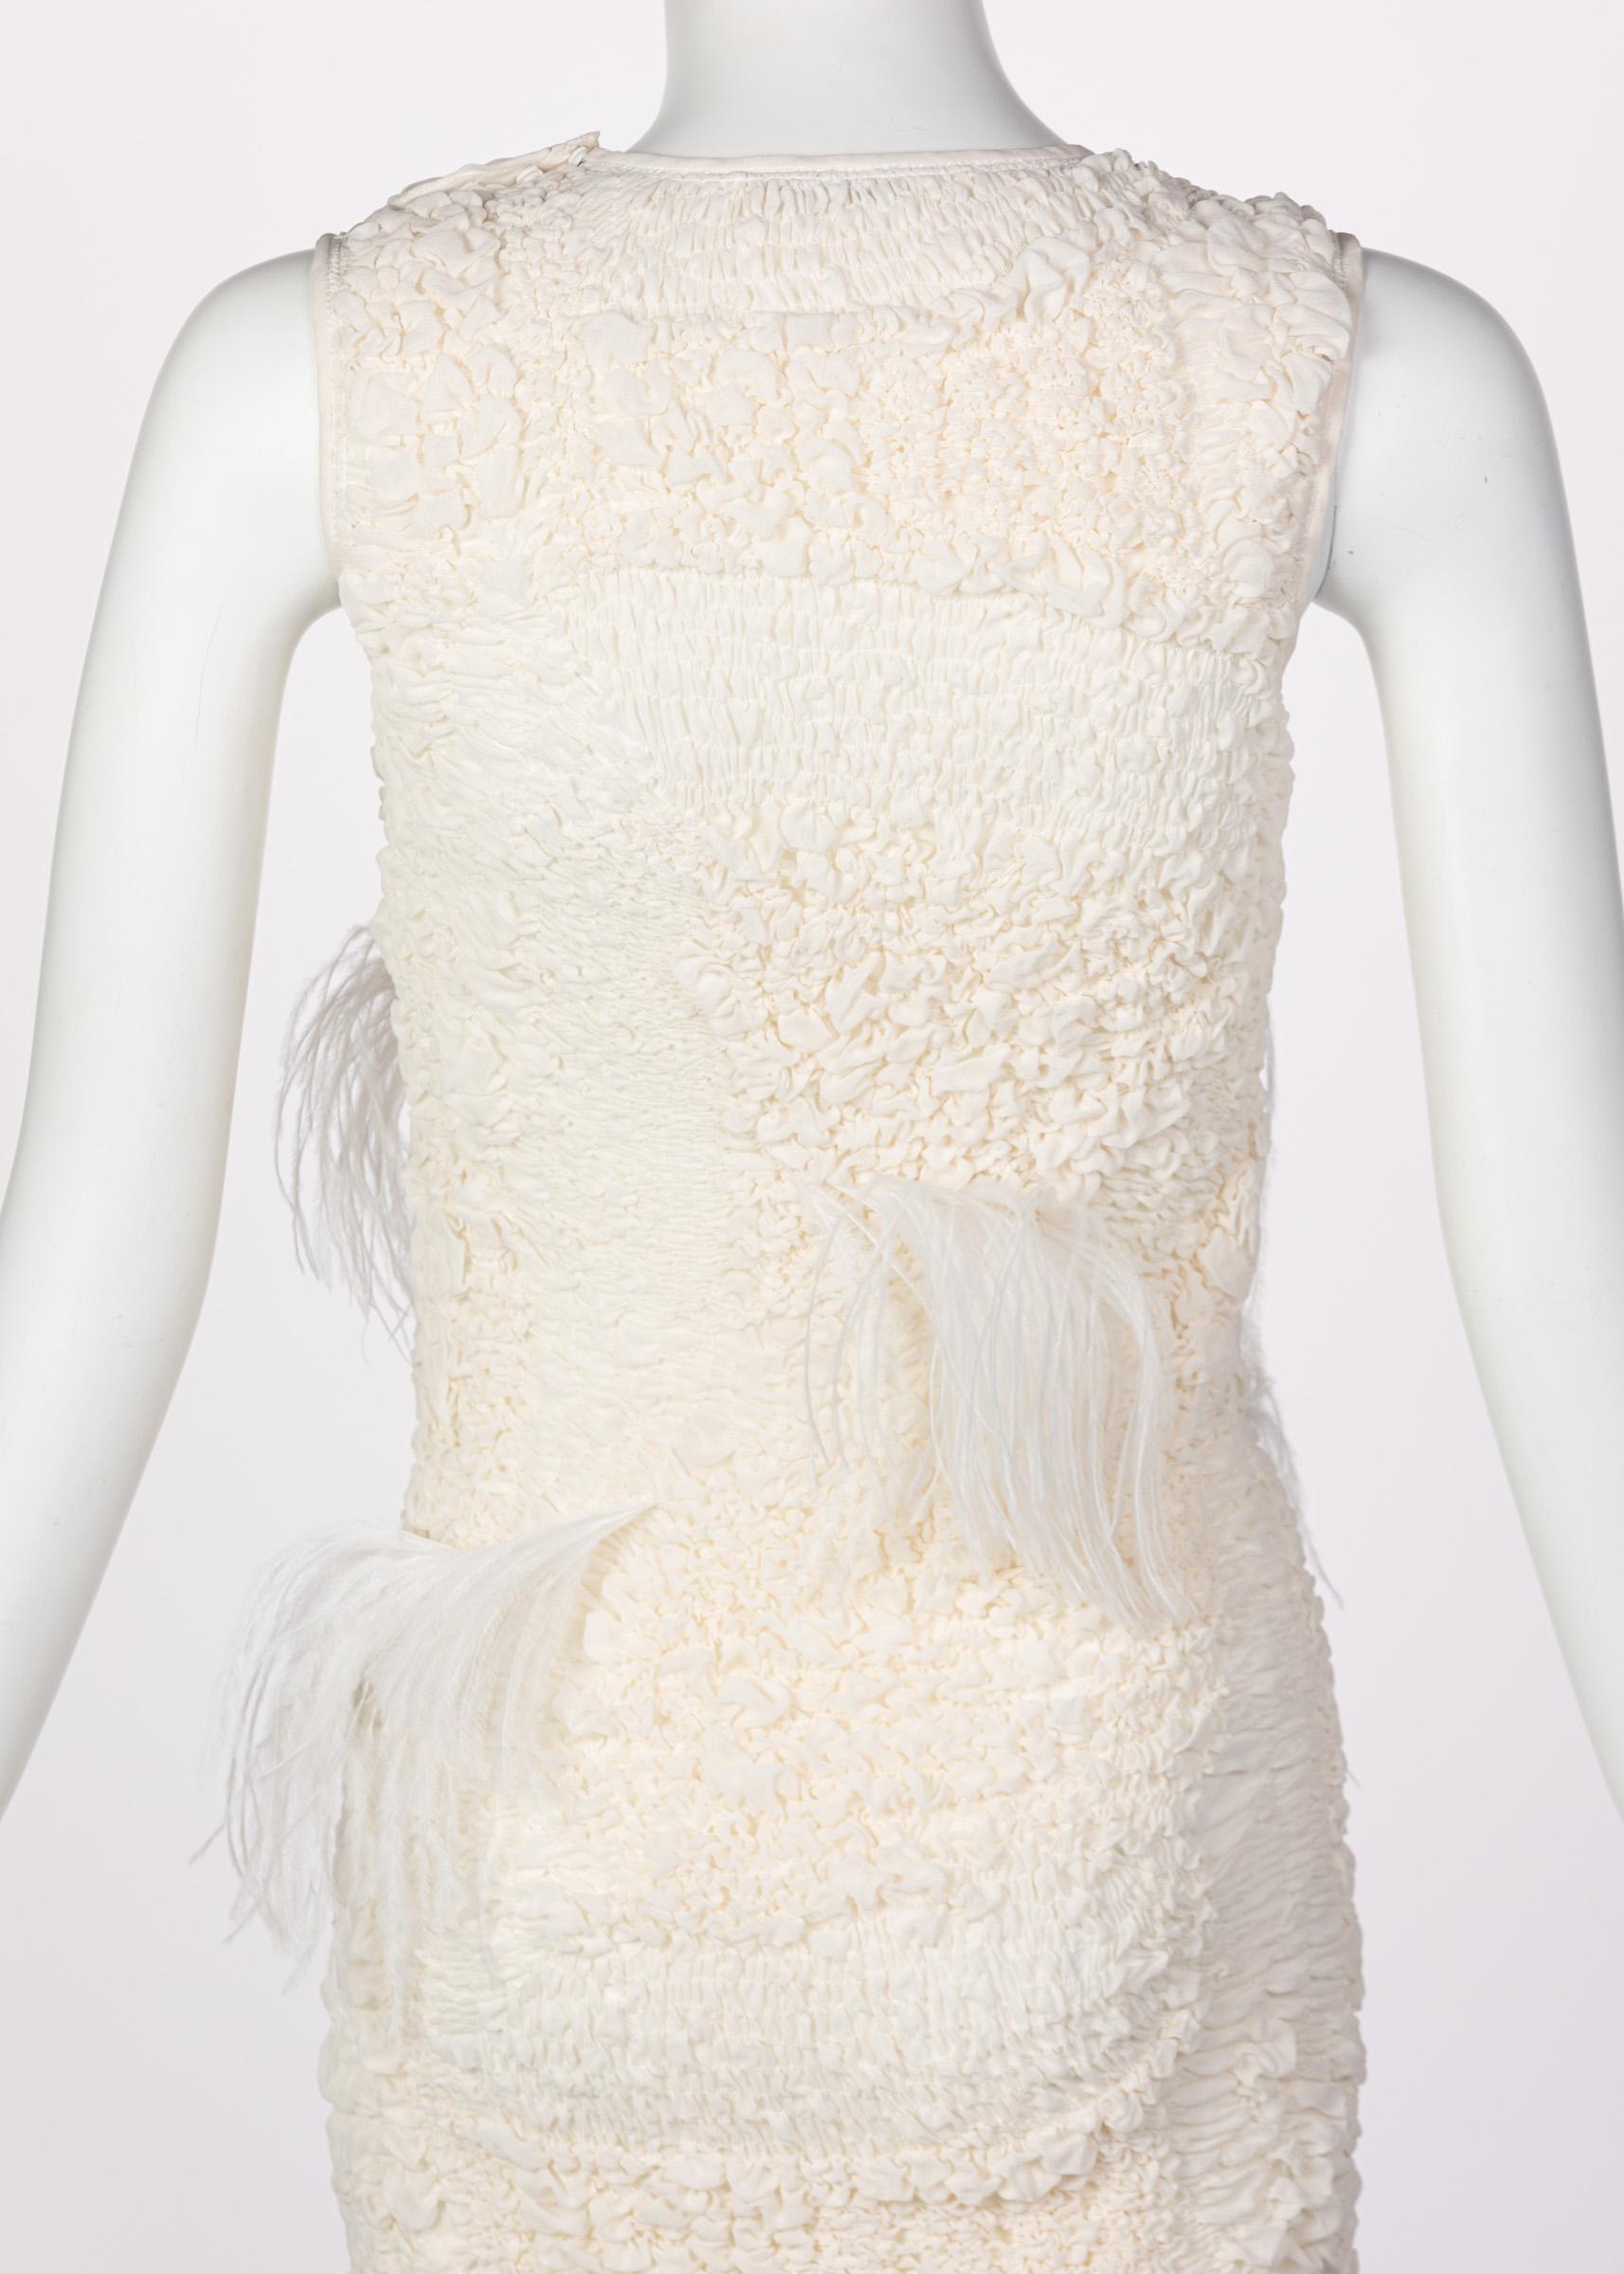 Nina Ricci Ivory Silk Feather Embellished Dress, Spring 2016 For Sale 4